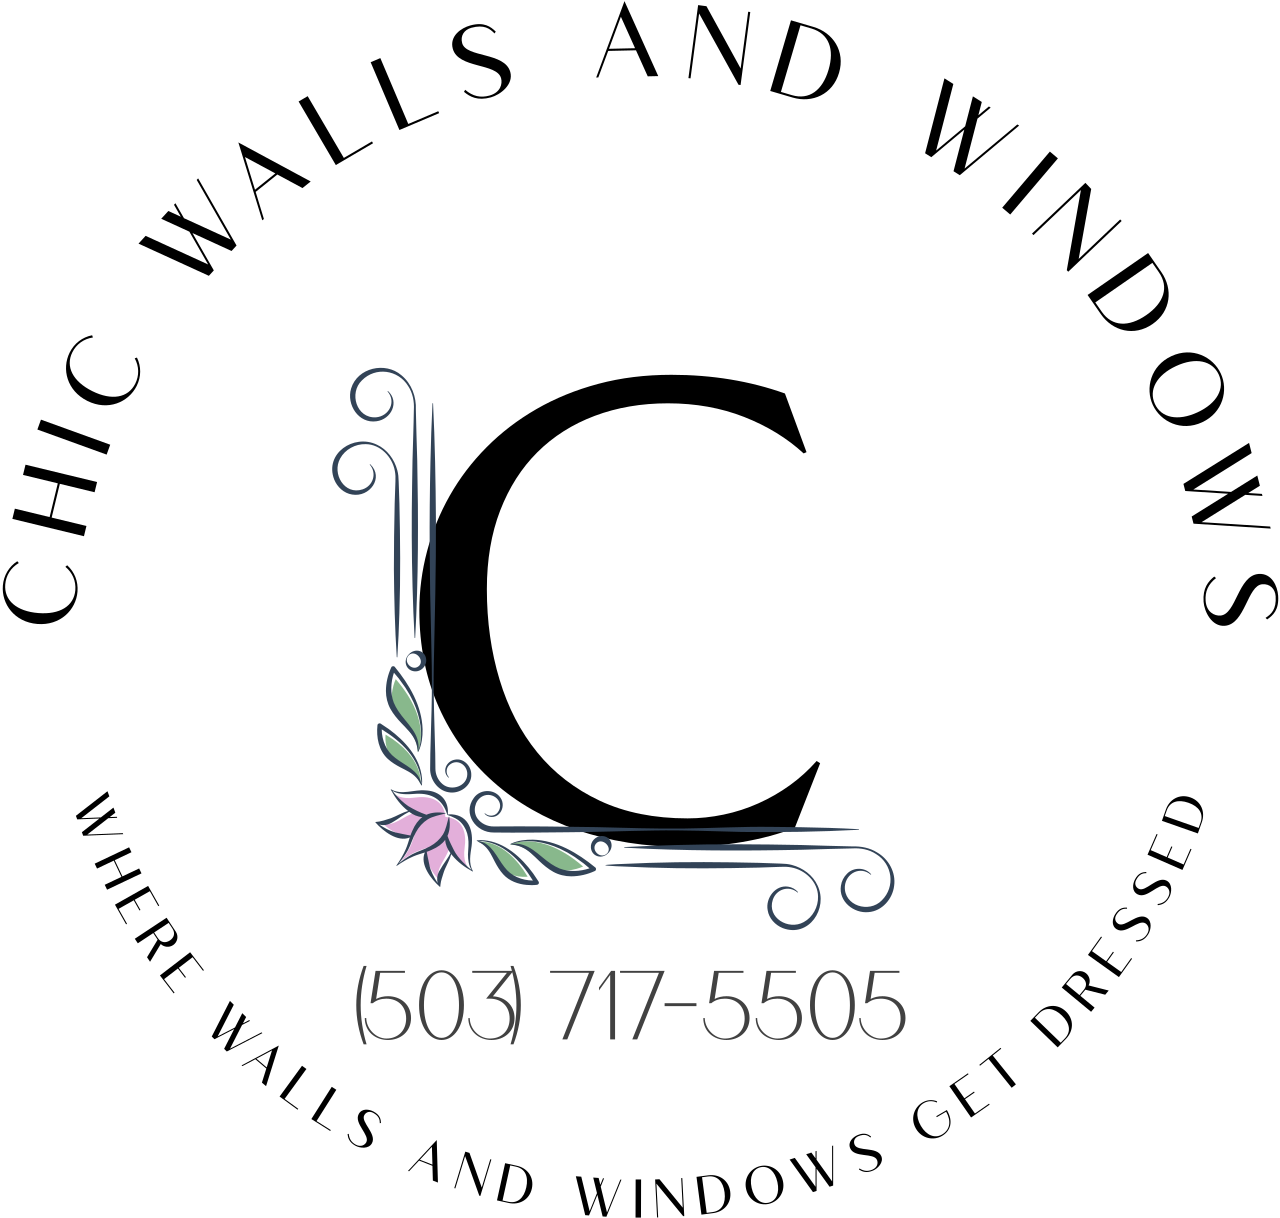 chic walls and windows's logo